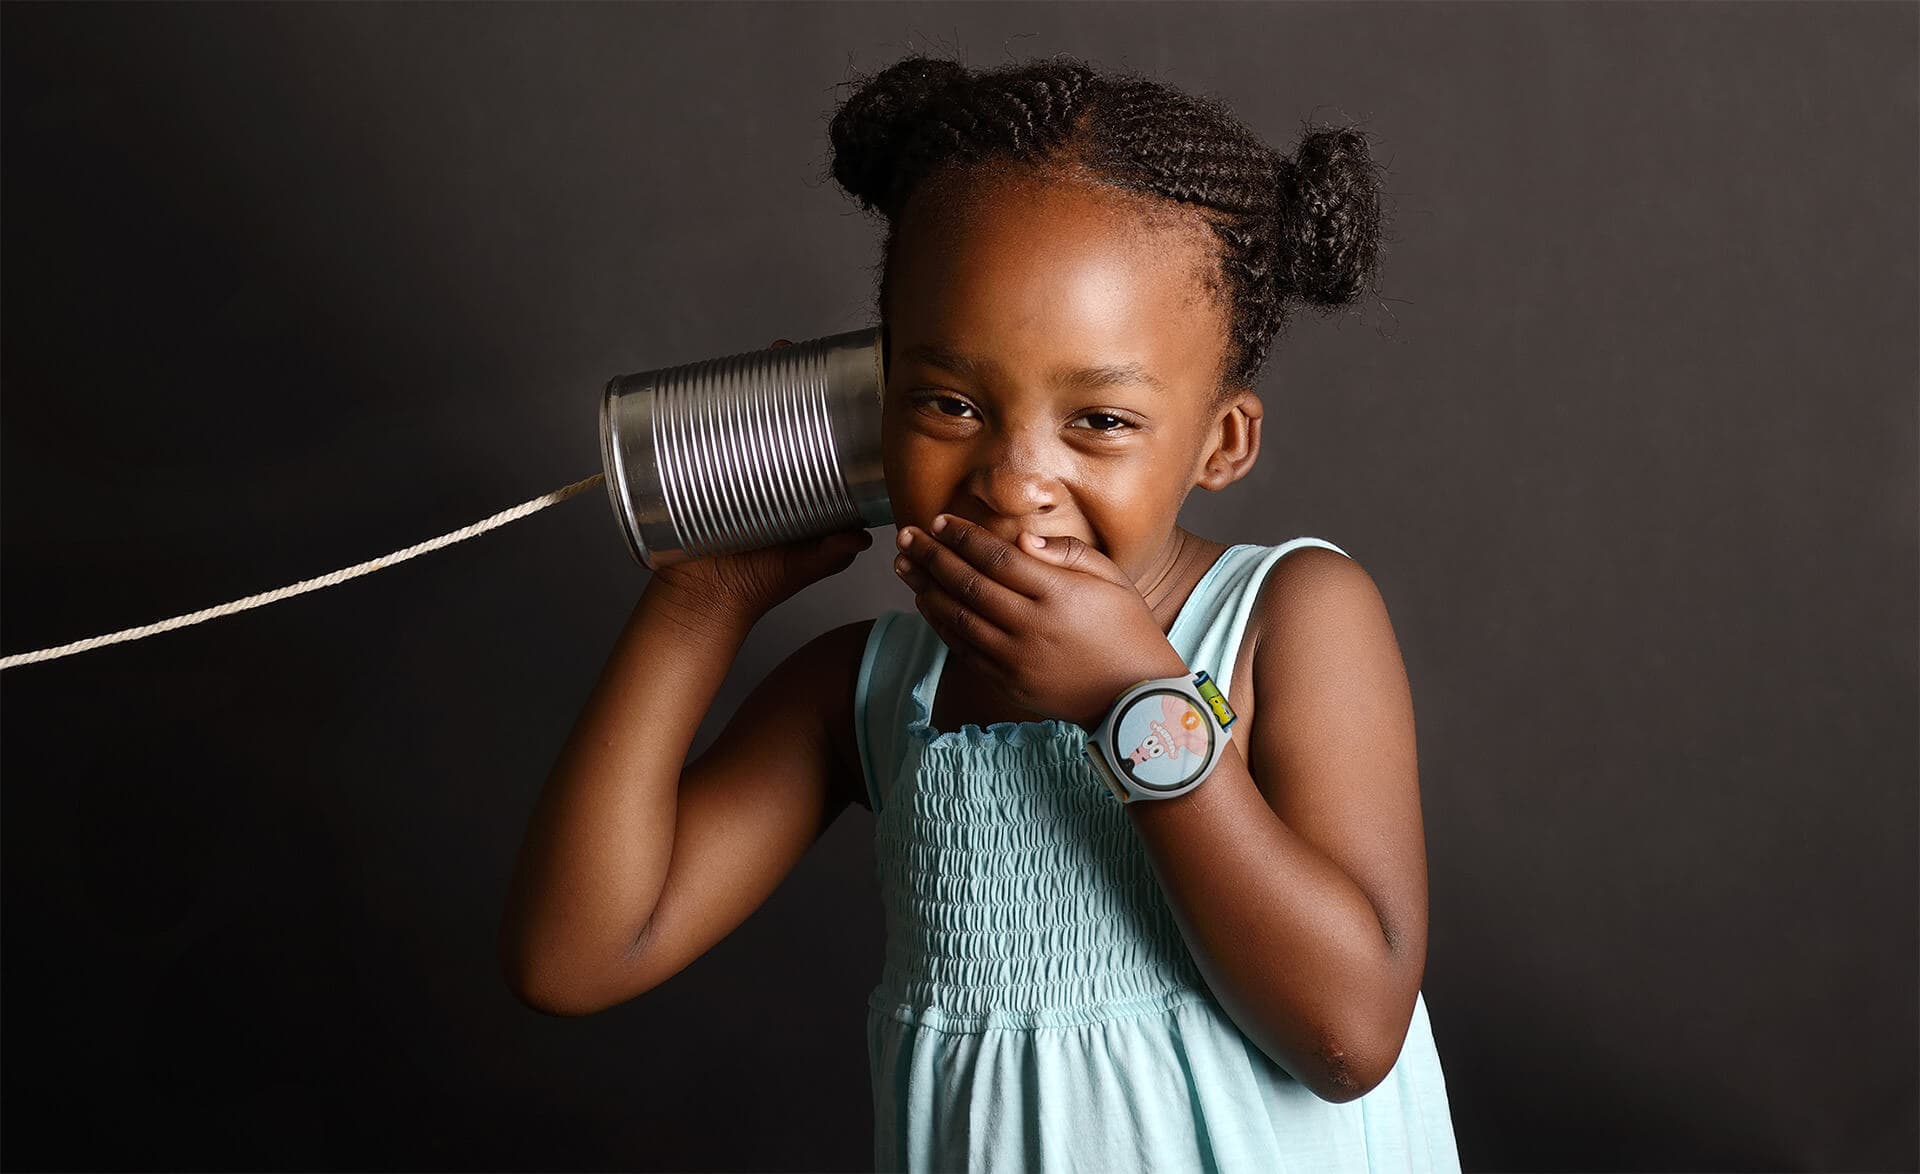 Girl wearing NickWatch playing telephone